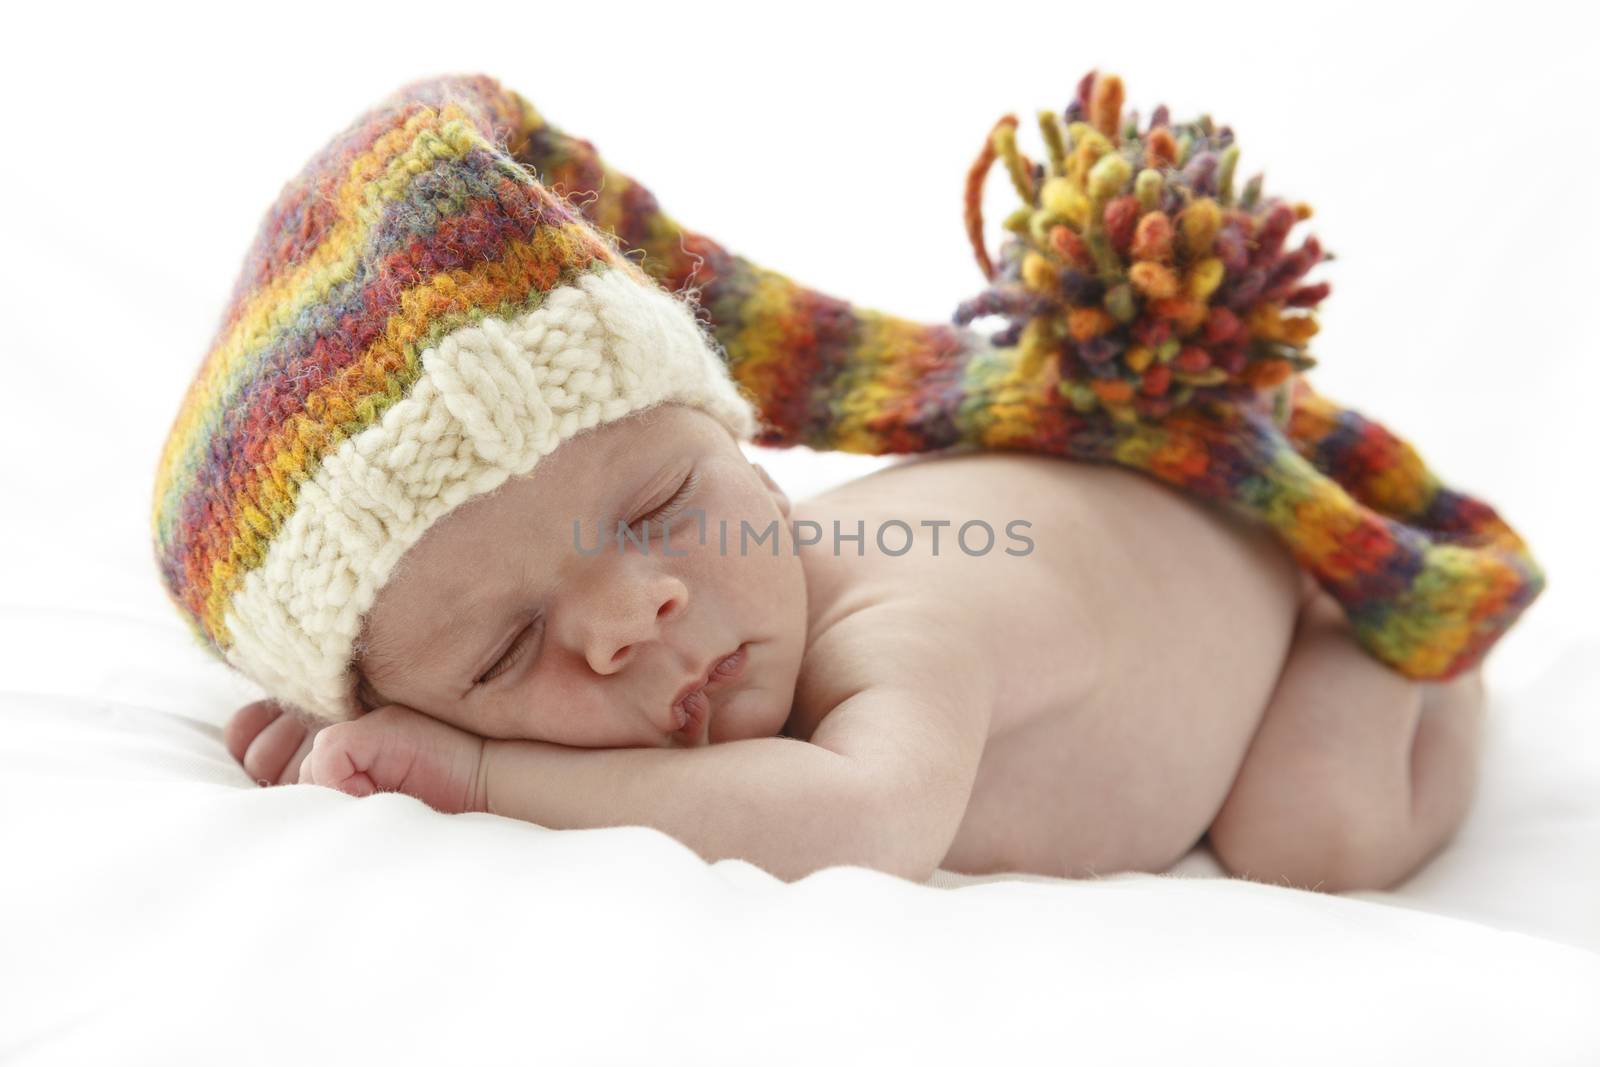 Sleeping newborn baby wearing a long multicolor hat.